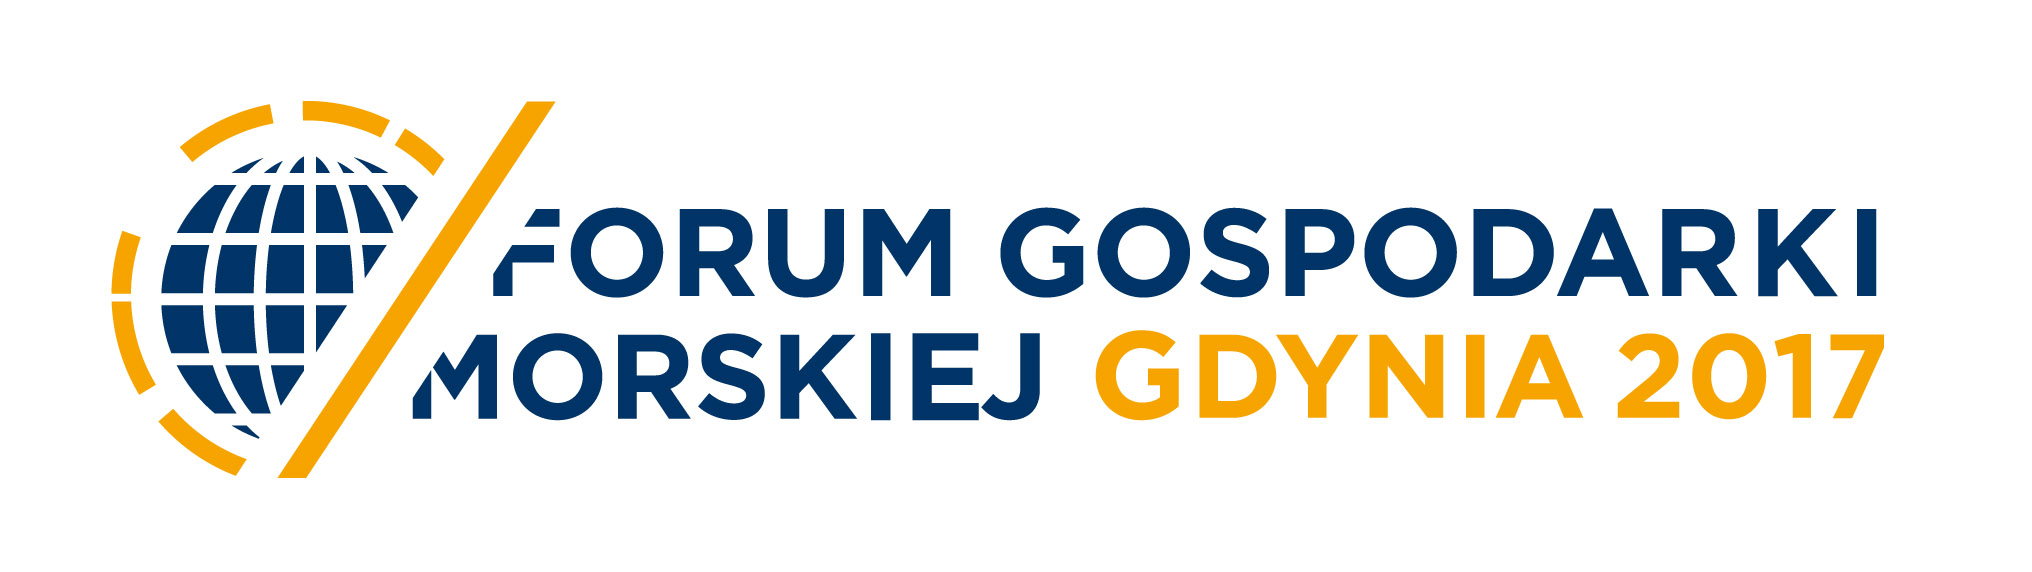 Forum Gospodarki Morskiej Gdynia 2017 - GospodarkaMorska.pl